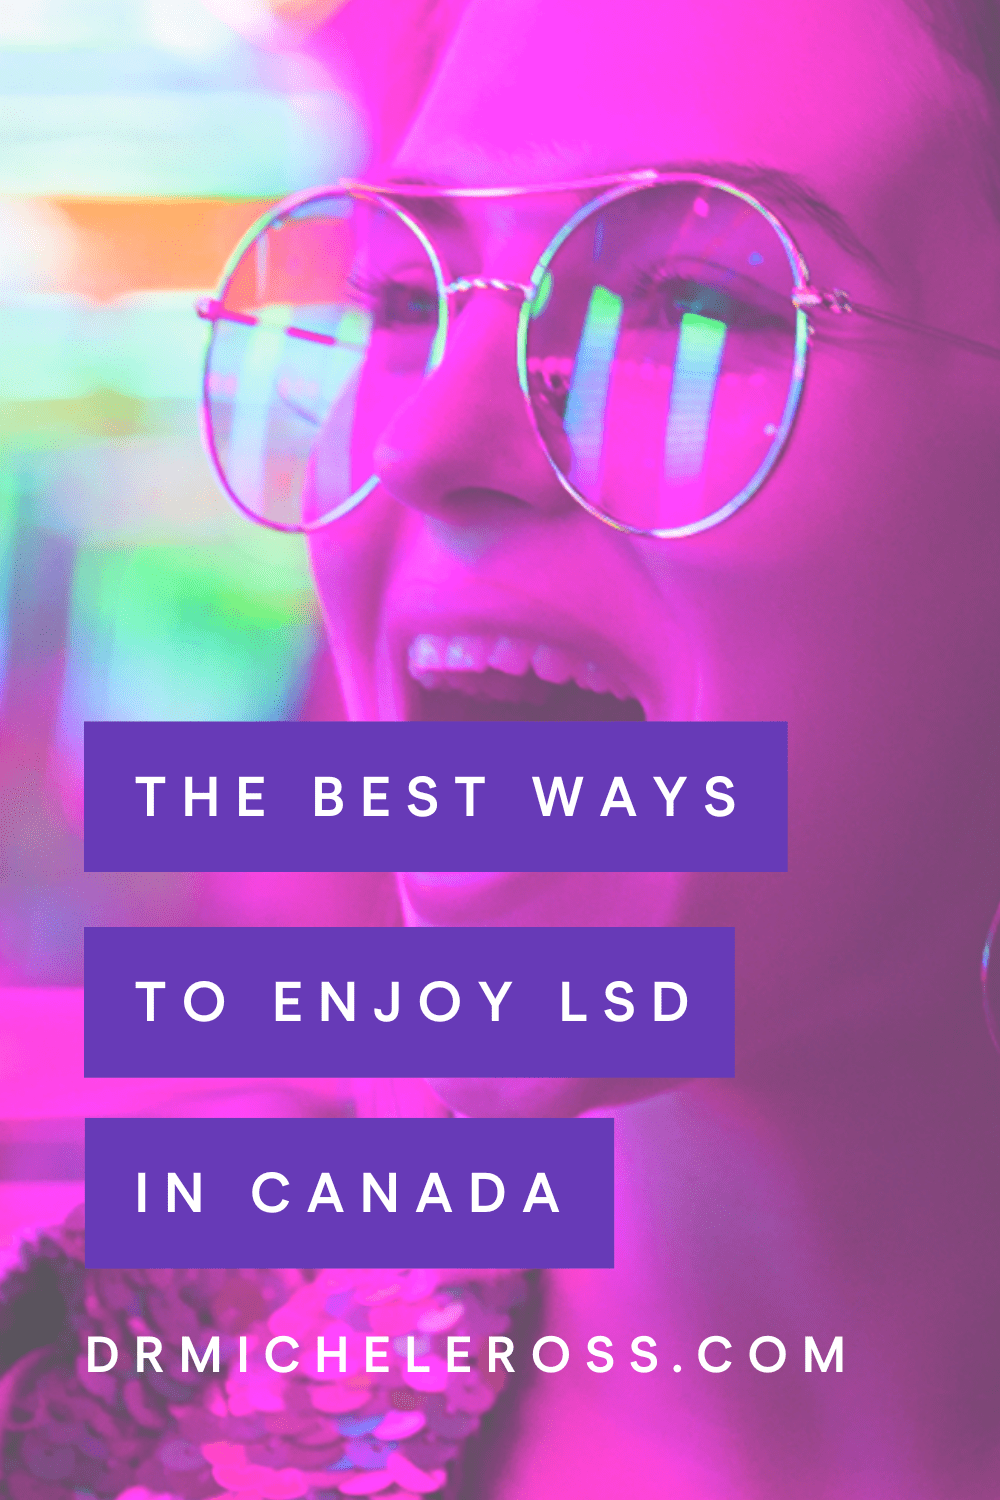 The Best Ways To Enjoy LSD In Canada